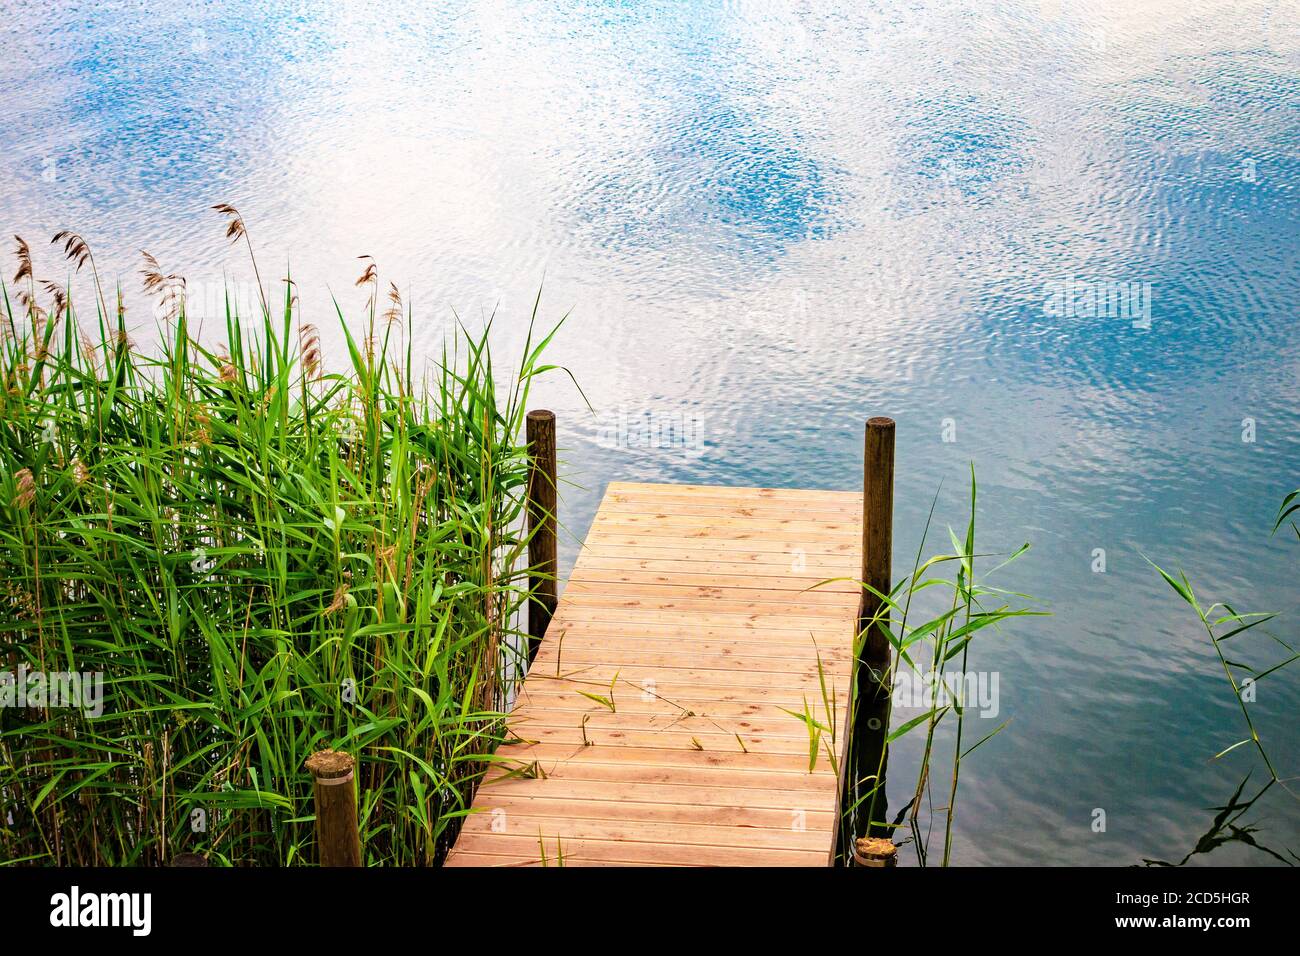 Wooden swimming platform at Bavarian lake in springtime, Germany Stock Photo